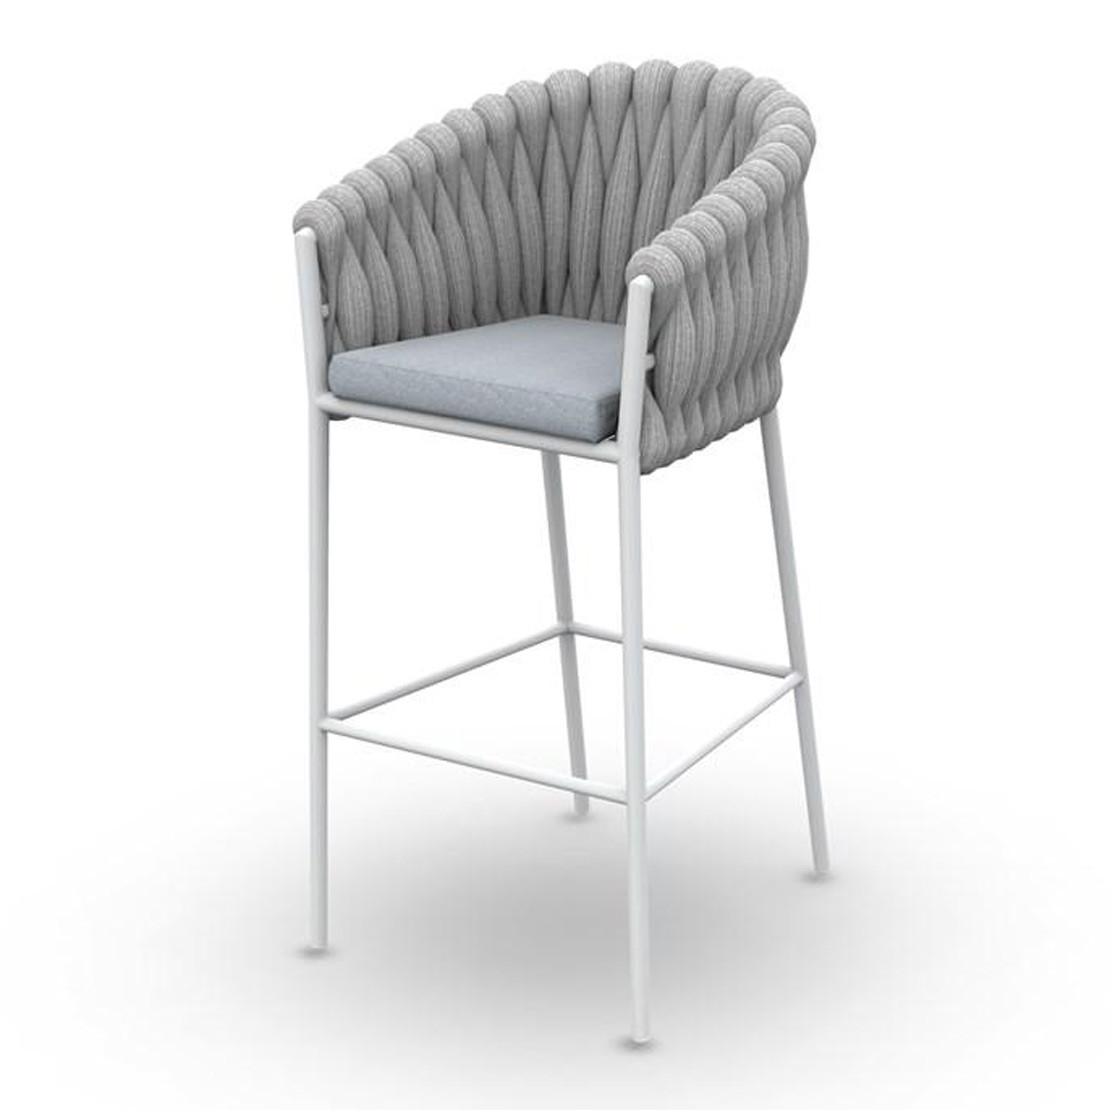 Fortuna Socks Bar Chair With Arms Alu White Mat Socks Seat Cushion Sunbrella Grey Chine